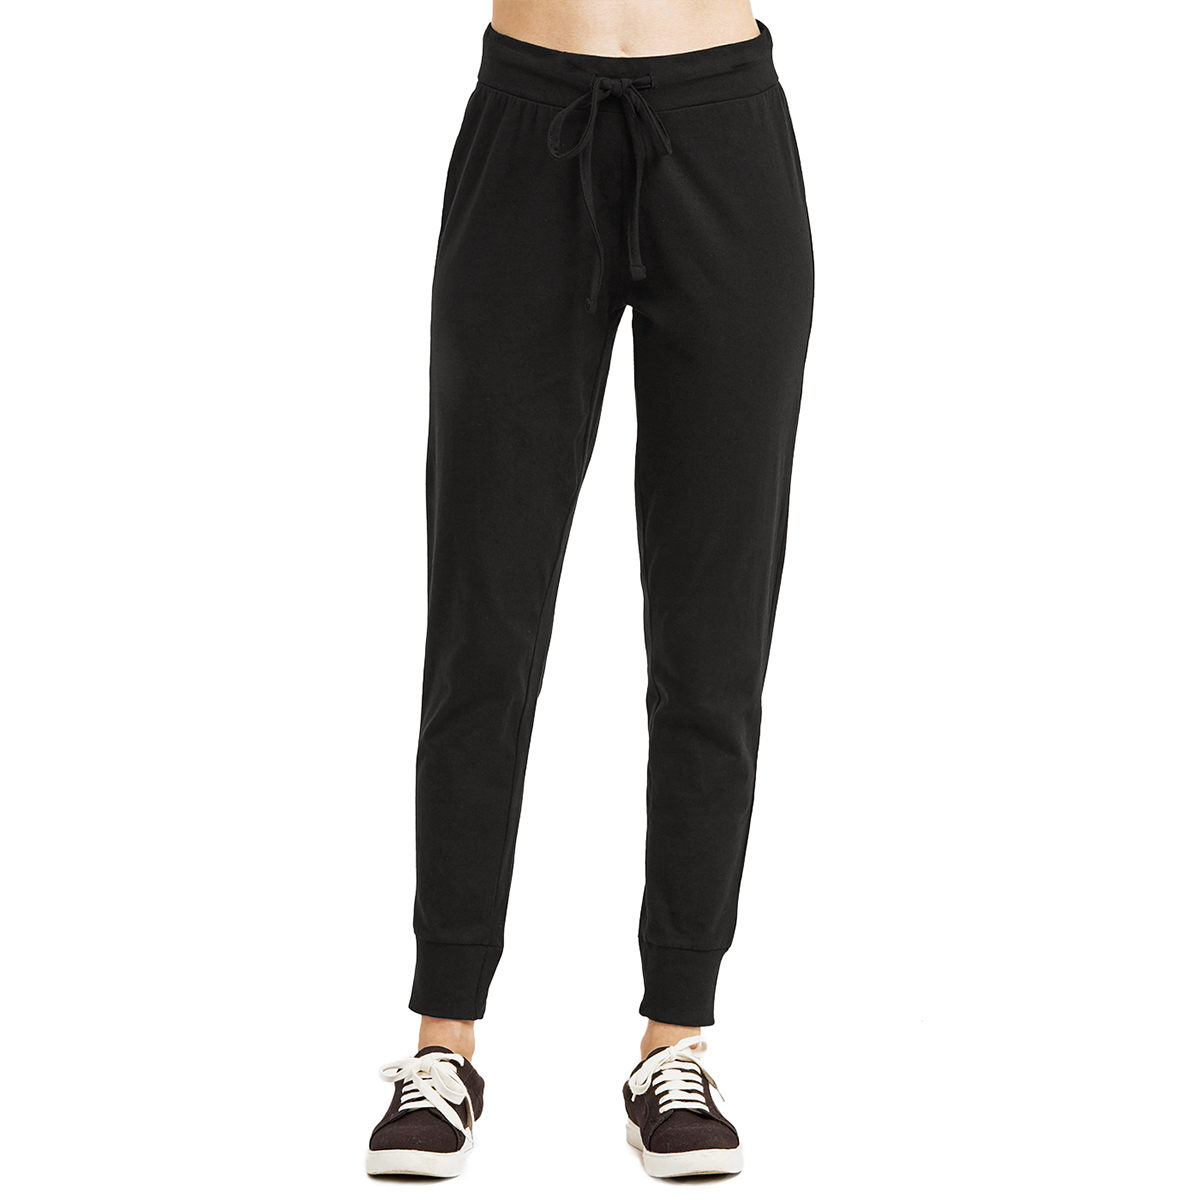 Wholesale Women's Cotton Joggers Pants, Medium in Black - DollarDays